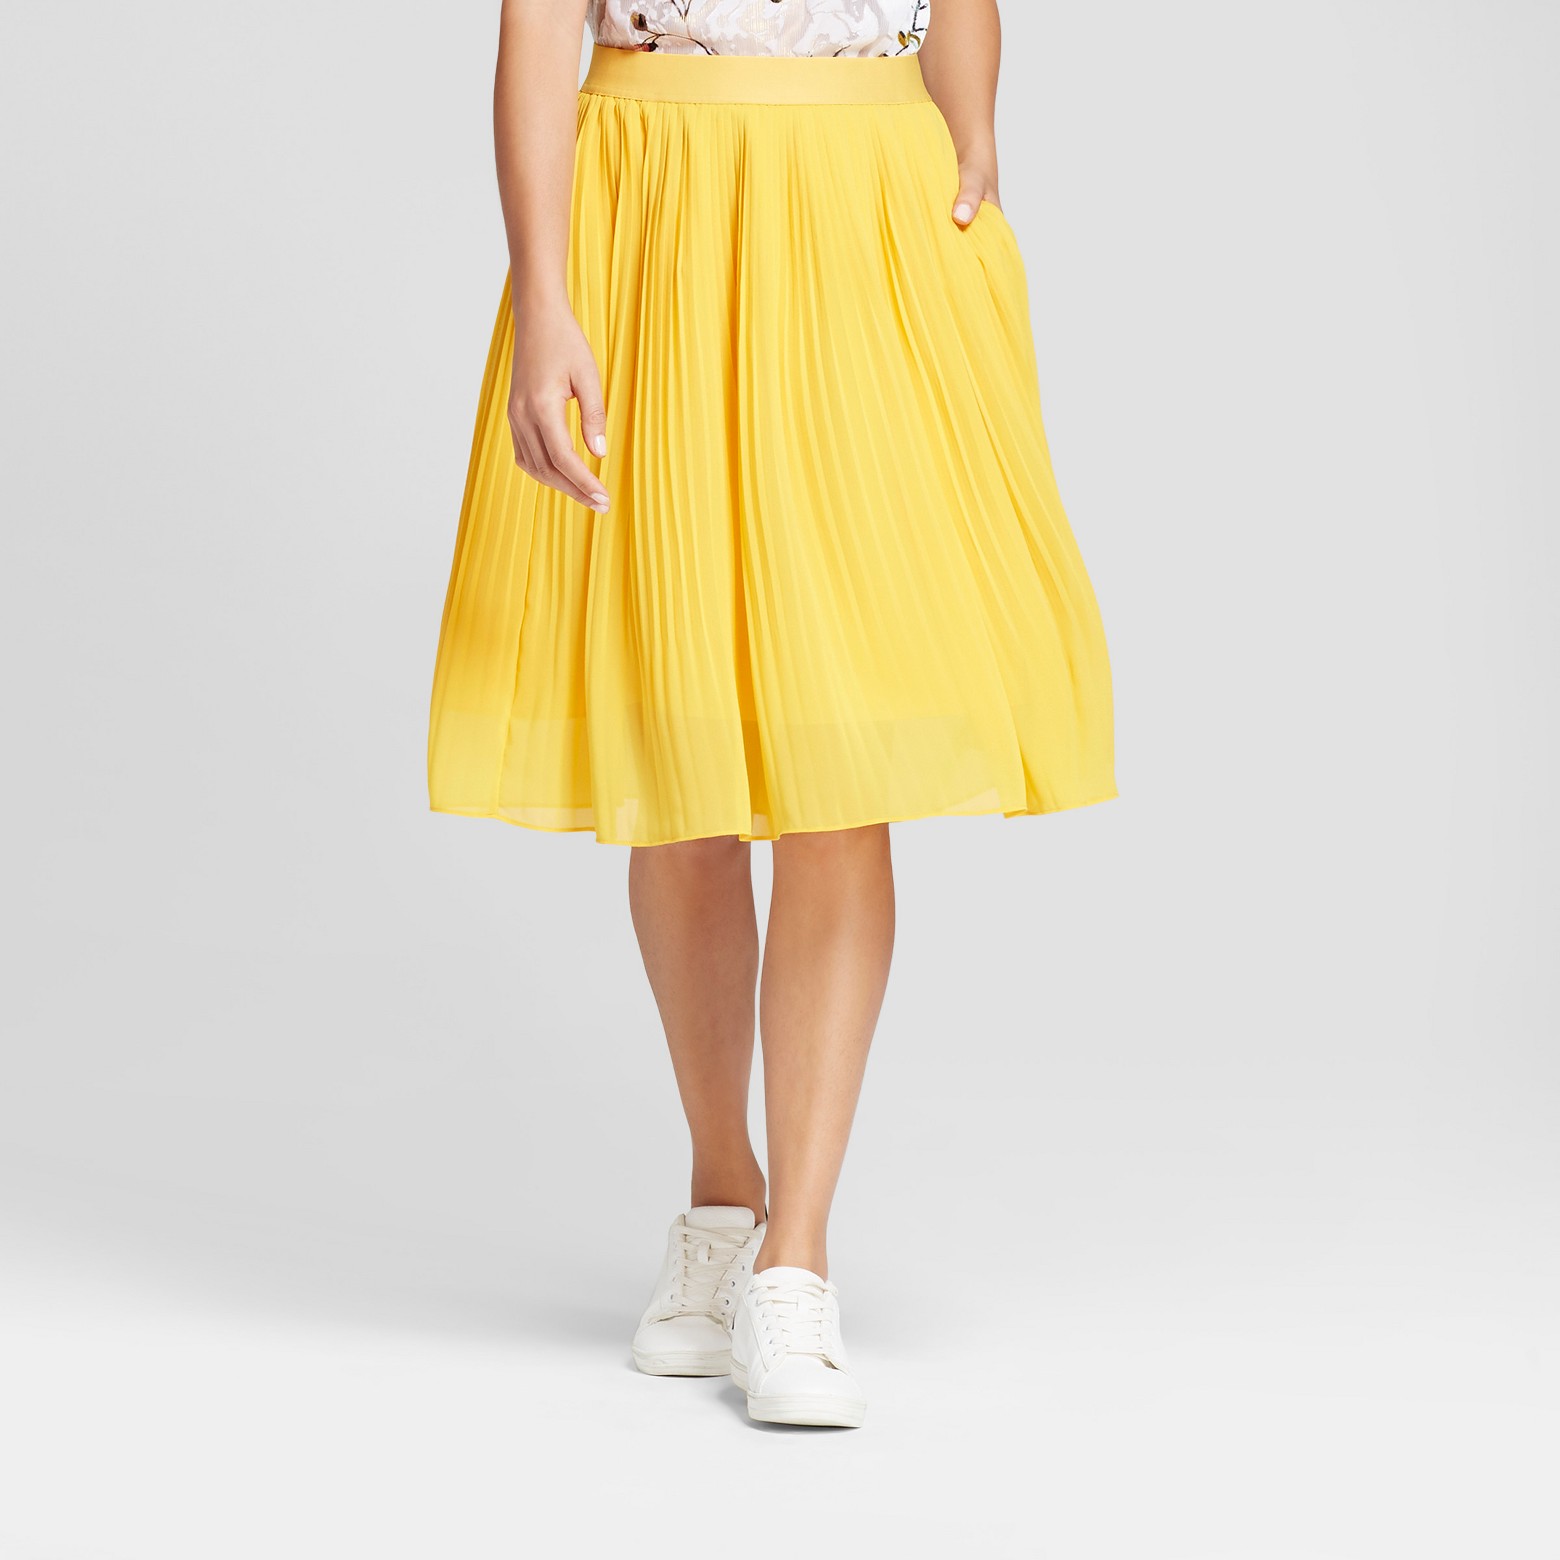  target yellow skirt